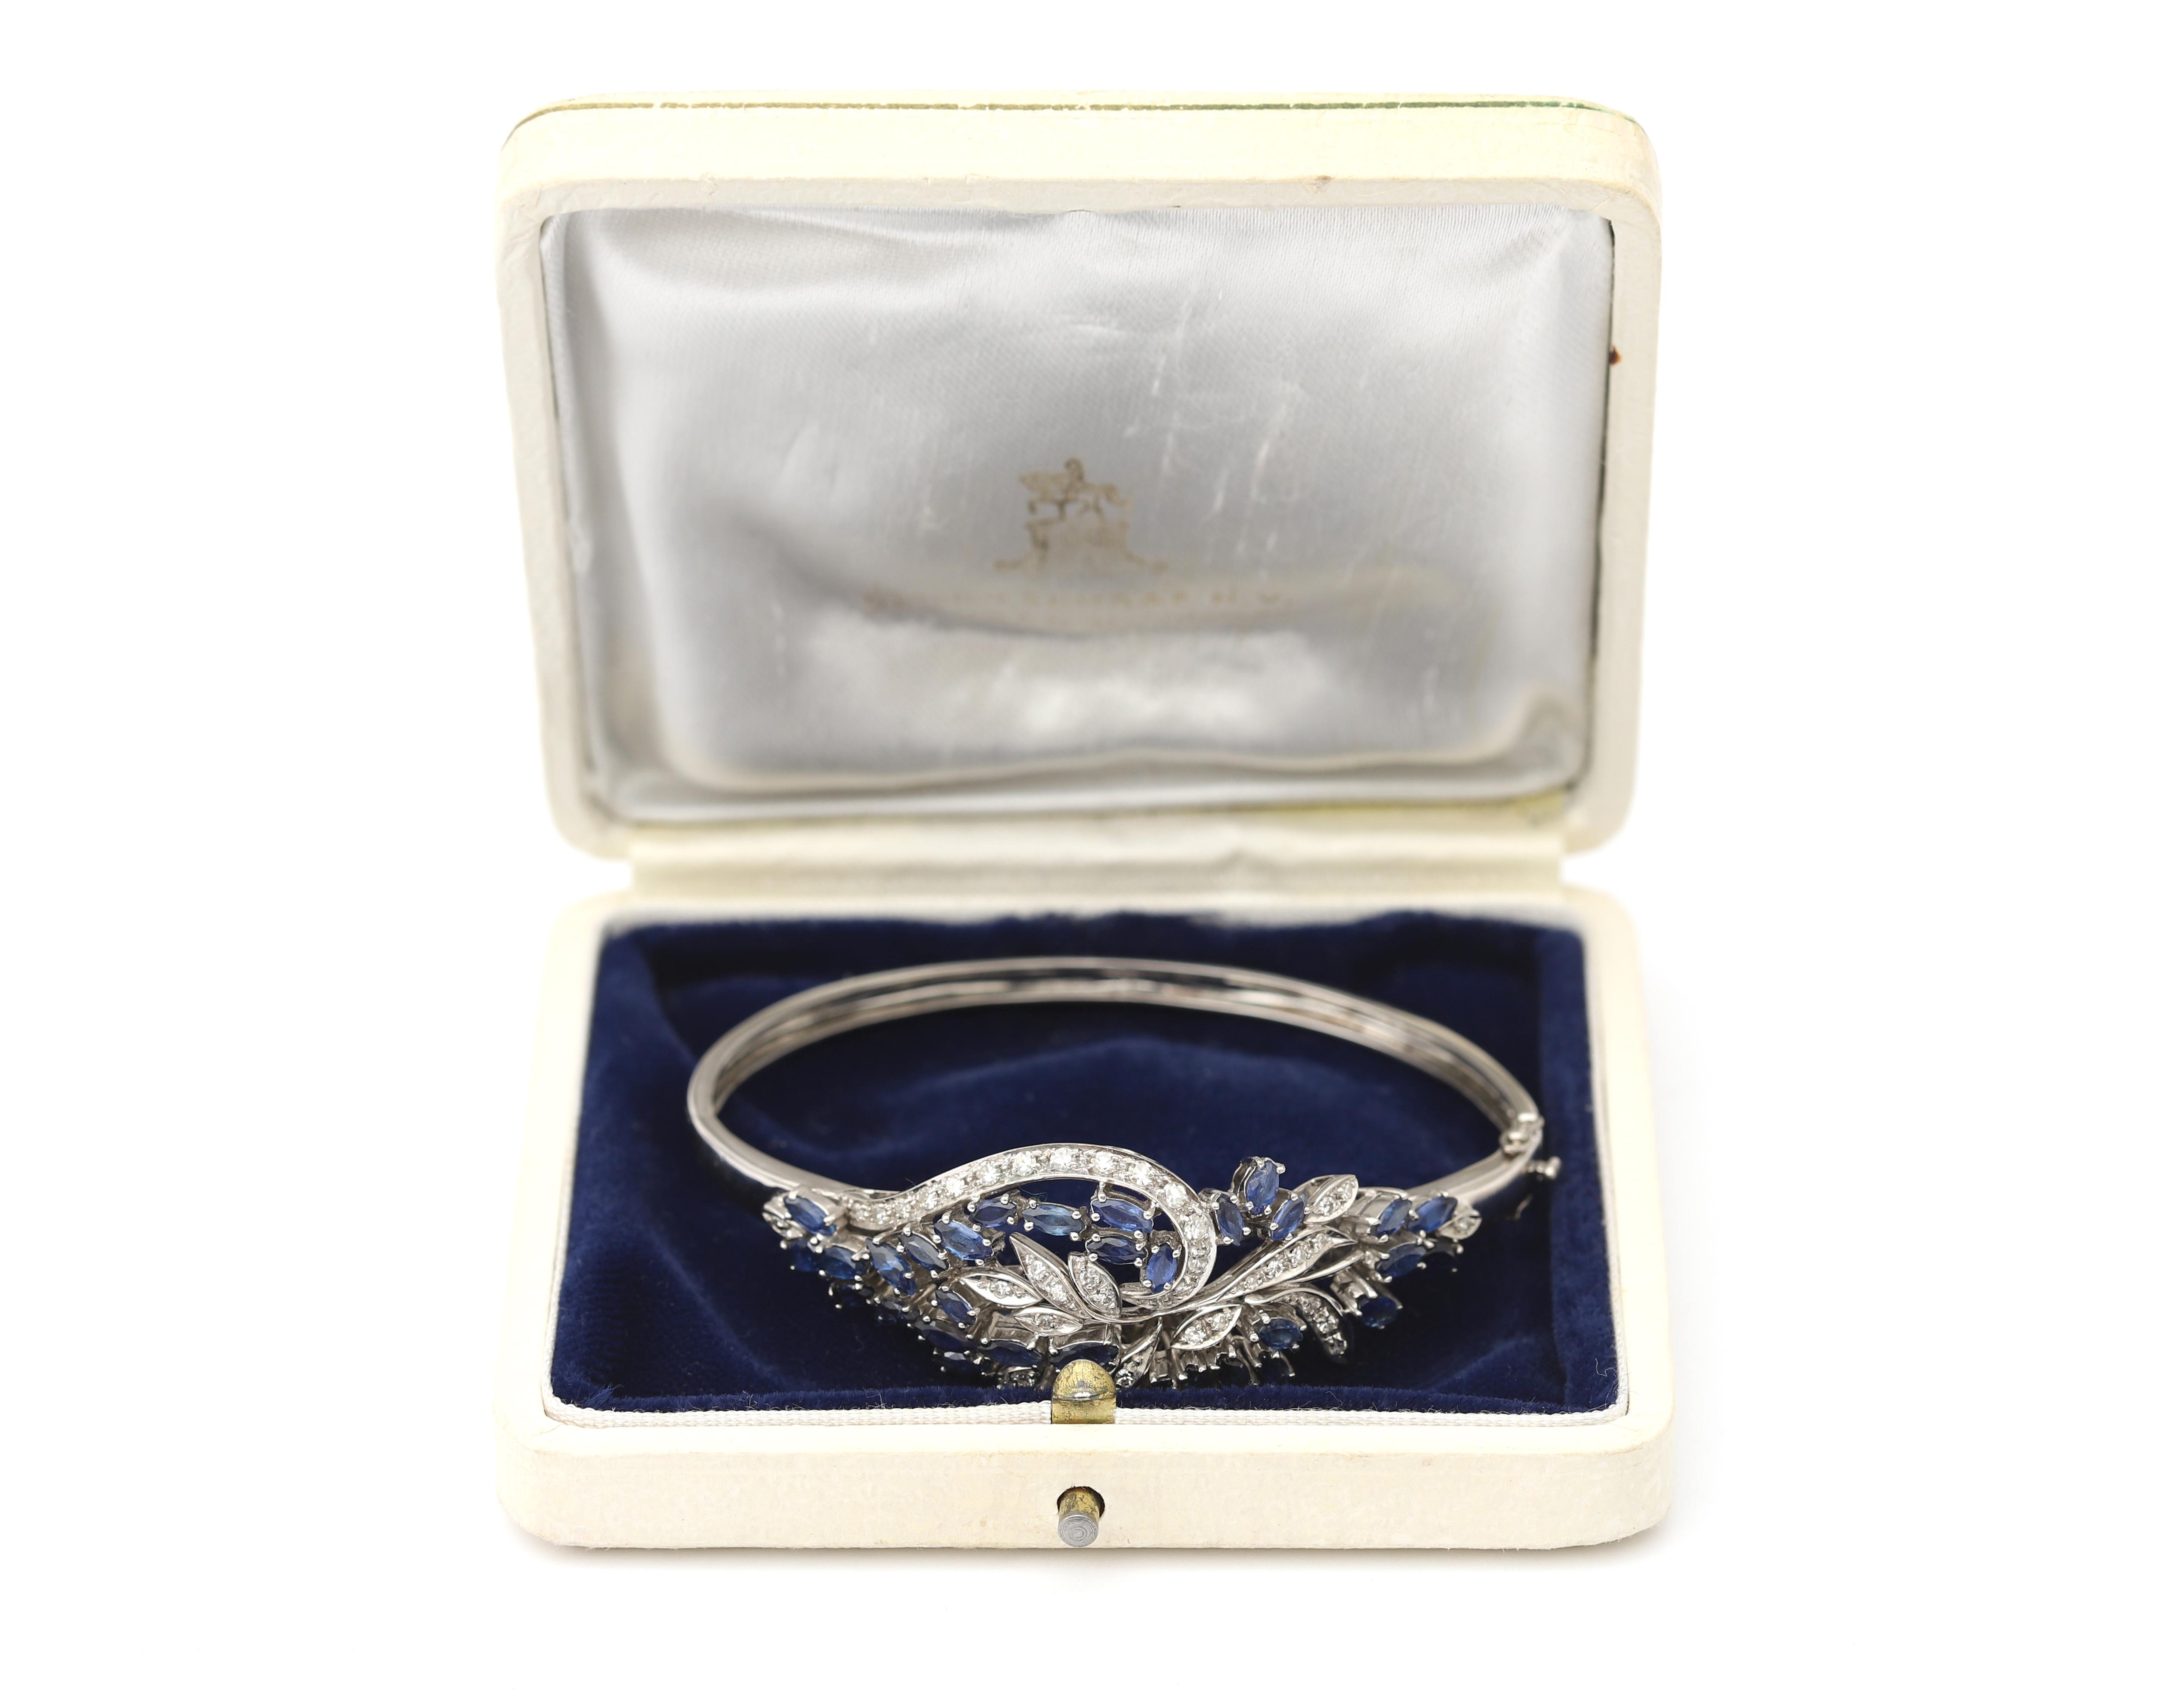 An 18 karat white gold bangel bracelet, with diamonds and sapphire - Image 5 of 6